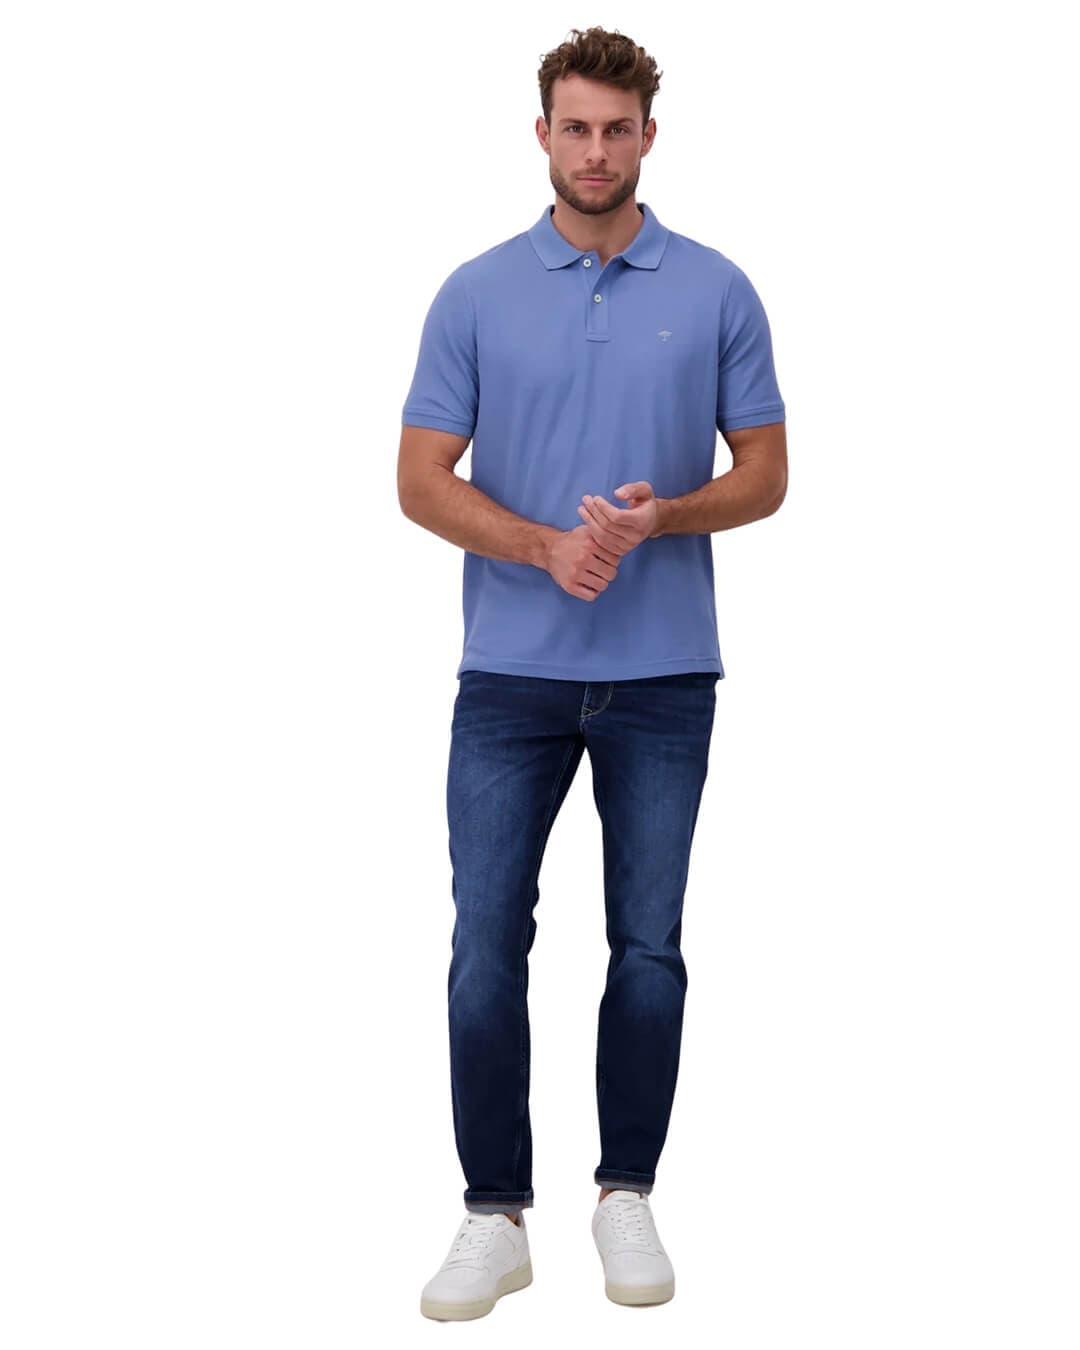 Fynch-Hatton Polo Shirts Fynch-Hatton Classic Supima Cotton Blue Polo Shirt